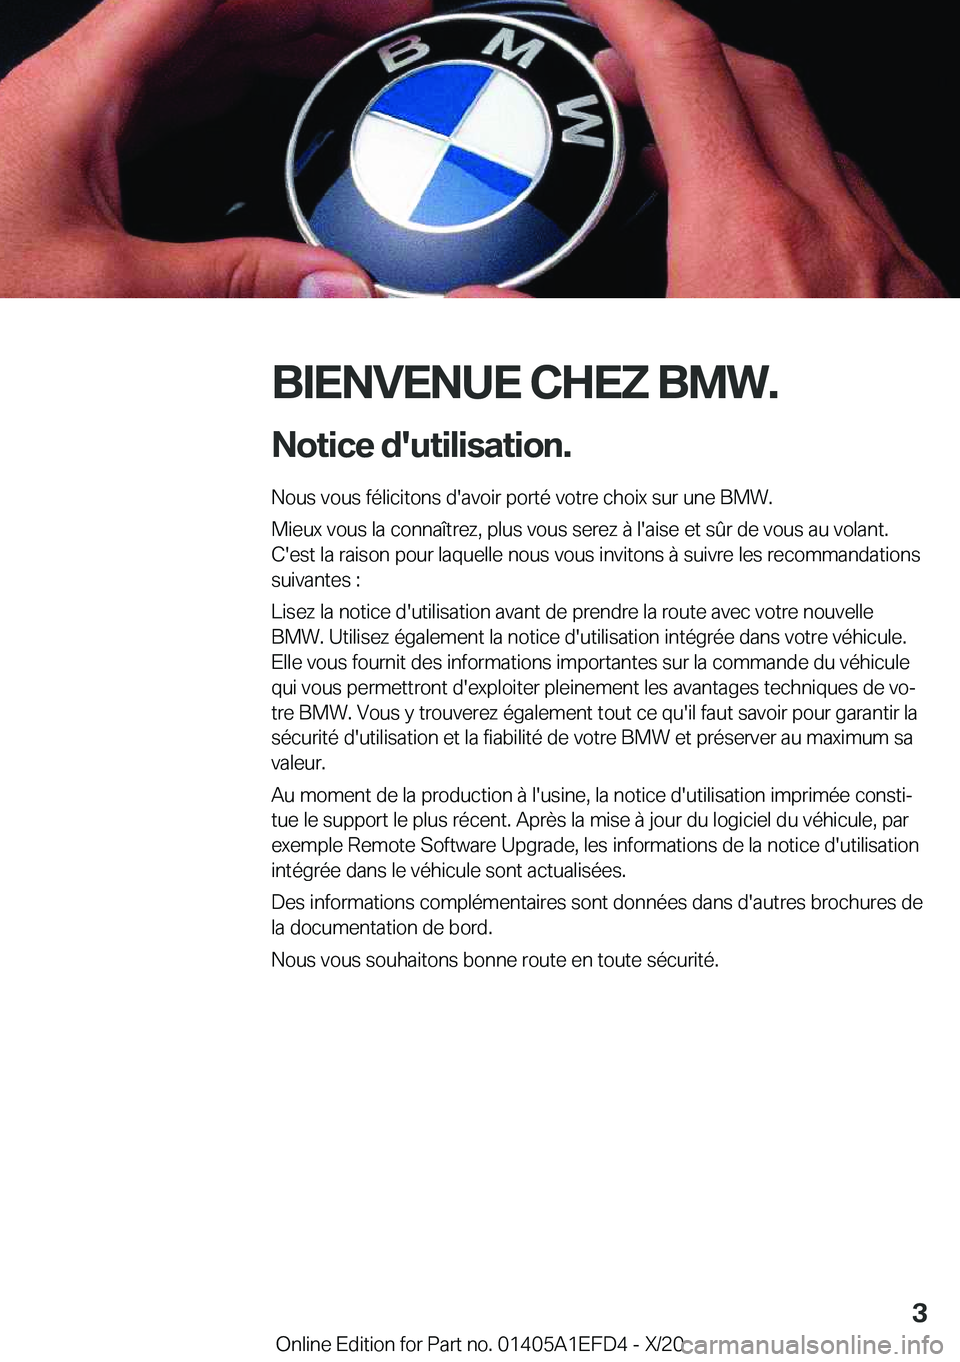 BMW X7 2021  Notices Demploi (in French) �B�I�E�N�V�E�N�U�E��C�H�E�Z��B�M�W�.�N�o�t�i�c�e��d�'�u�t�i�l�i�s�a�t�i�o�n�.
�N�o�u�s��v�o�u�s��f�é�l�i�c�i�t�o�n�s��d�'�a�v�o�i�r��p�o�r�t�é��v�o�t�r�e��c�h�o�i�x��s�u�r��u�n�e�